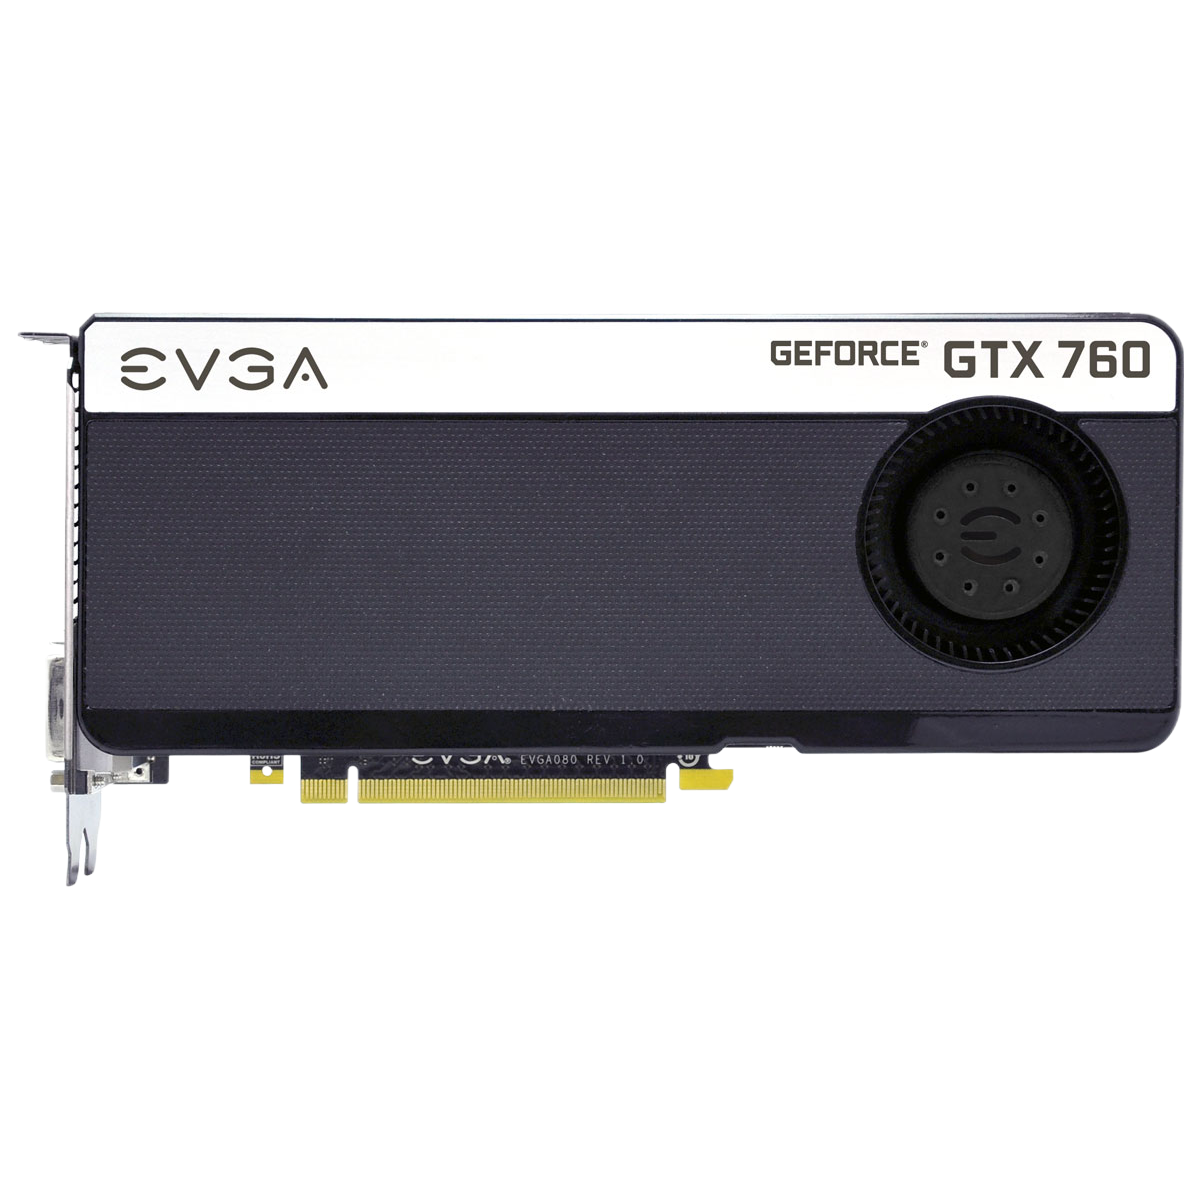 EVGA GeForce GTX 760 4GB GDDR5 PCI Express 3.0 SLI Support Video Card 04G-P4-2766-KR